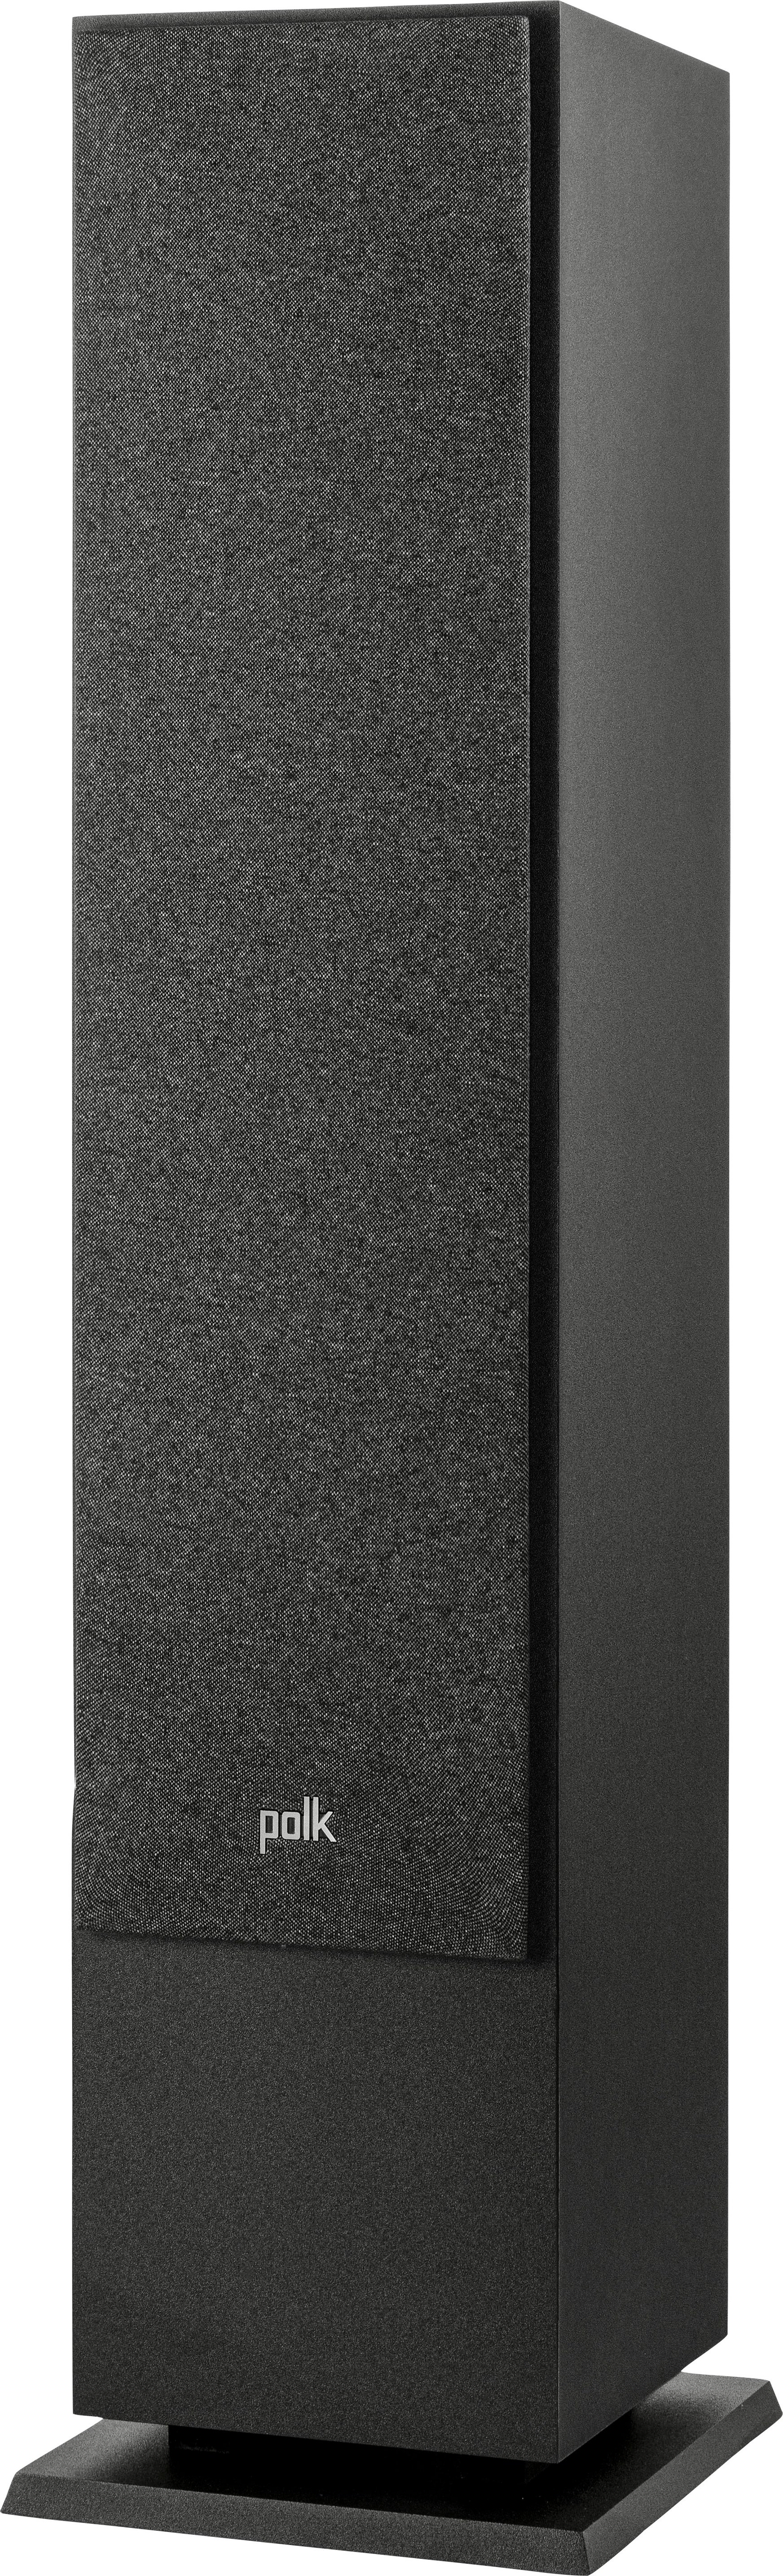 Angle View: Polk Audio - Monitor XT60 Tower Speaker - Midnight Black